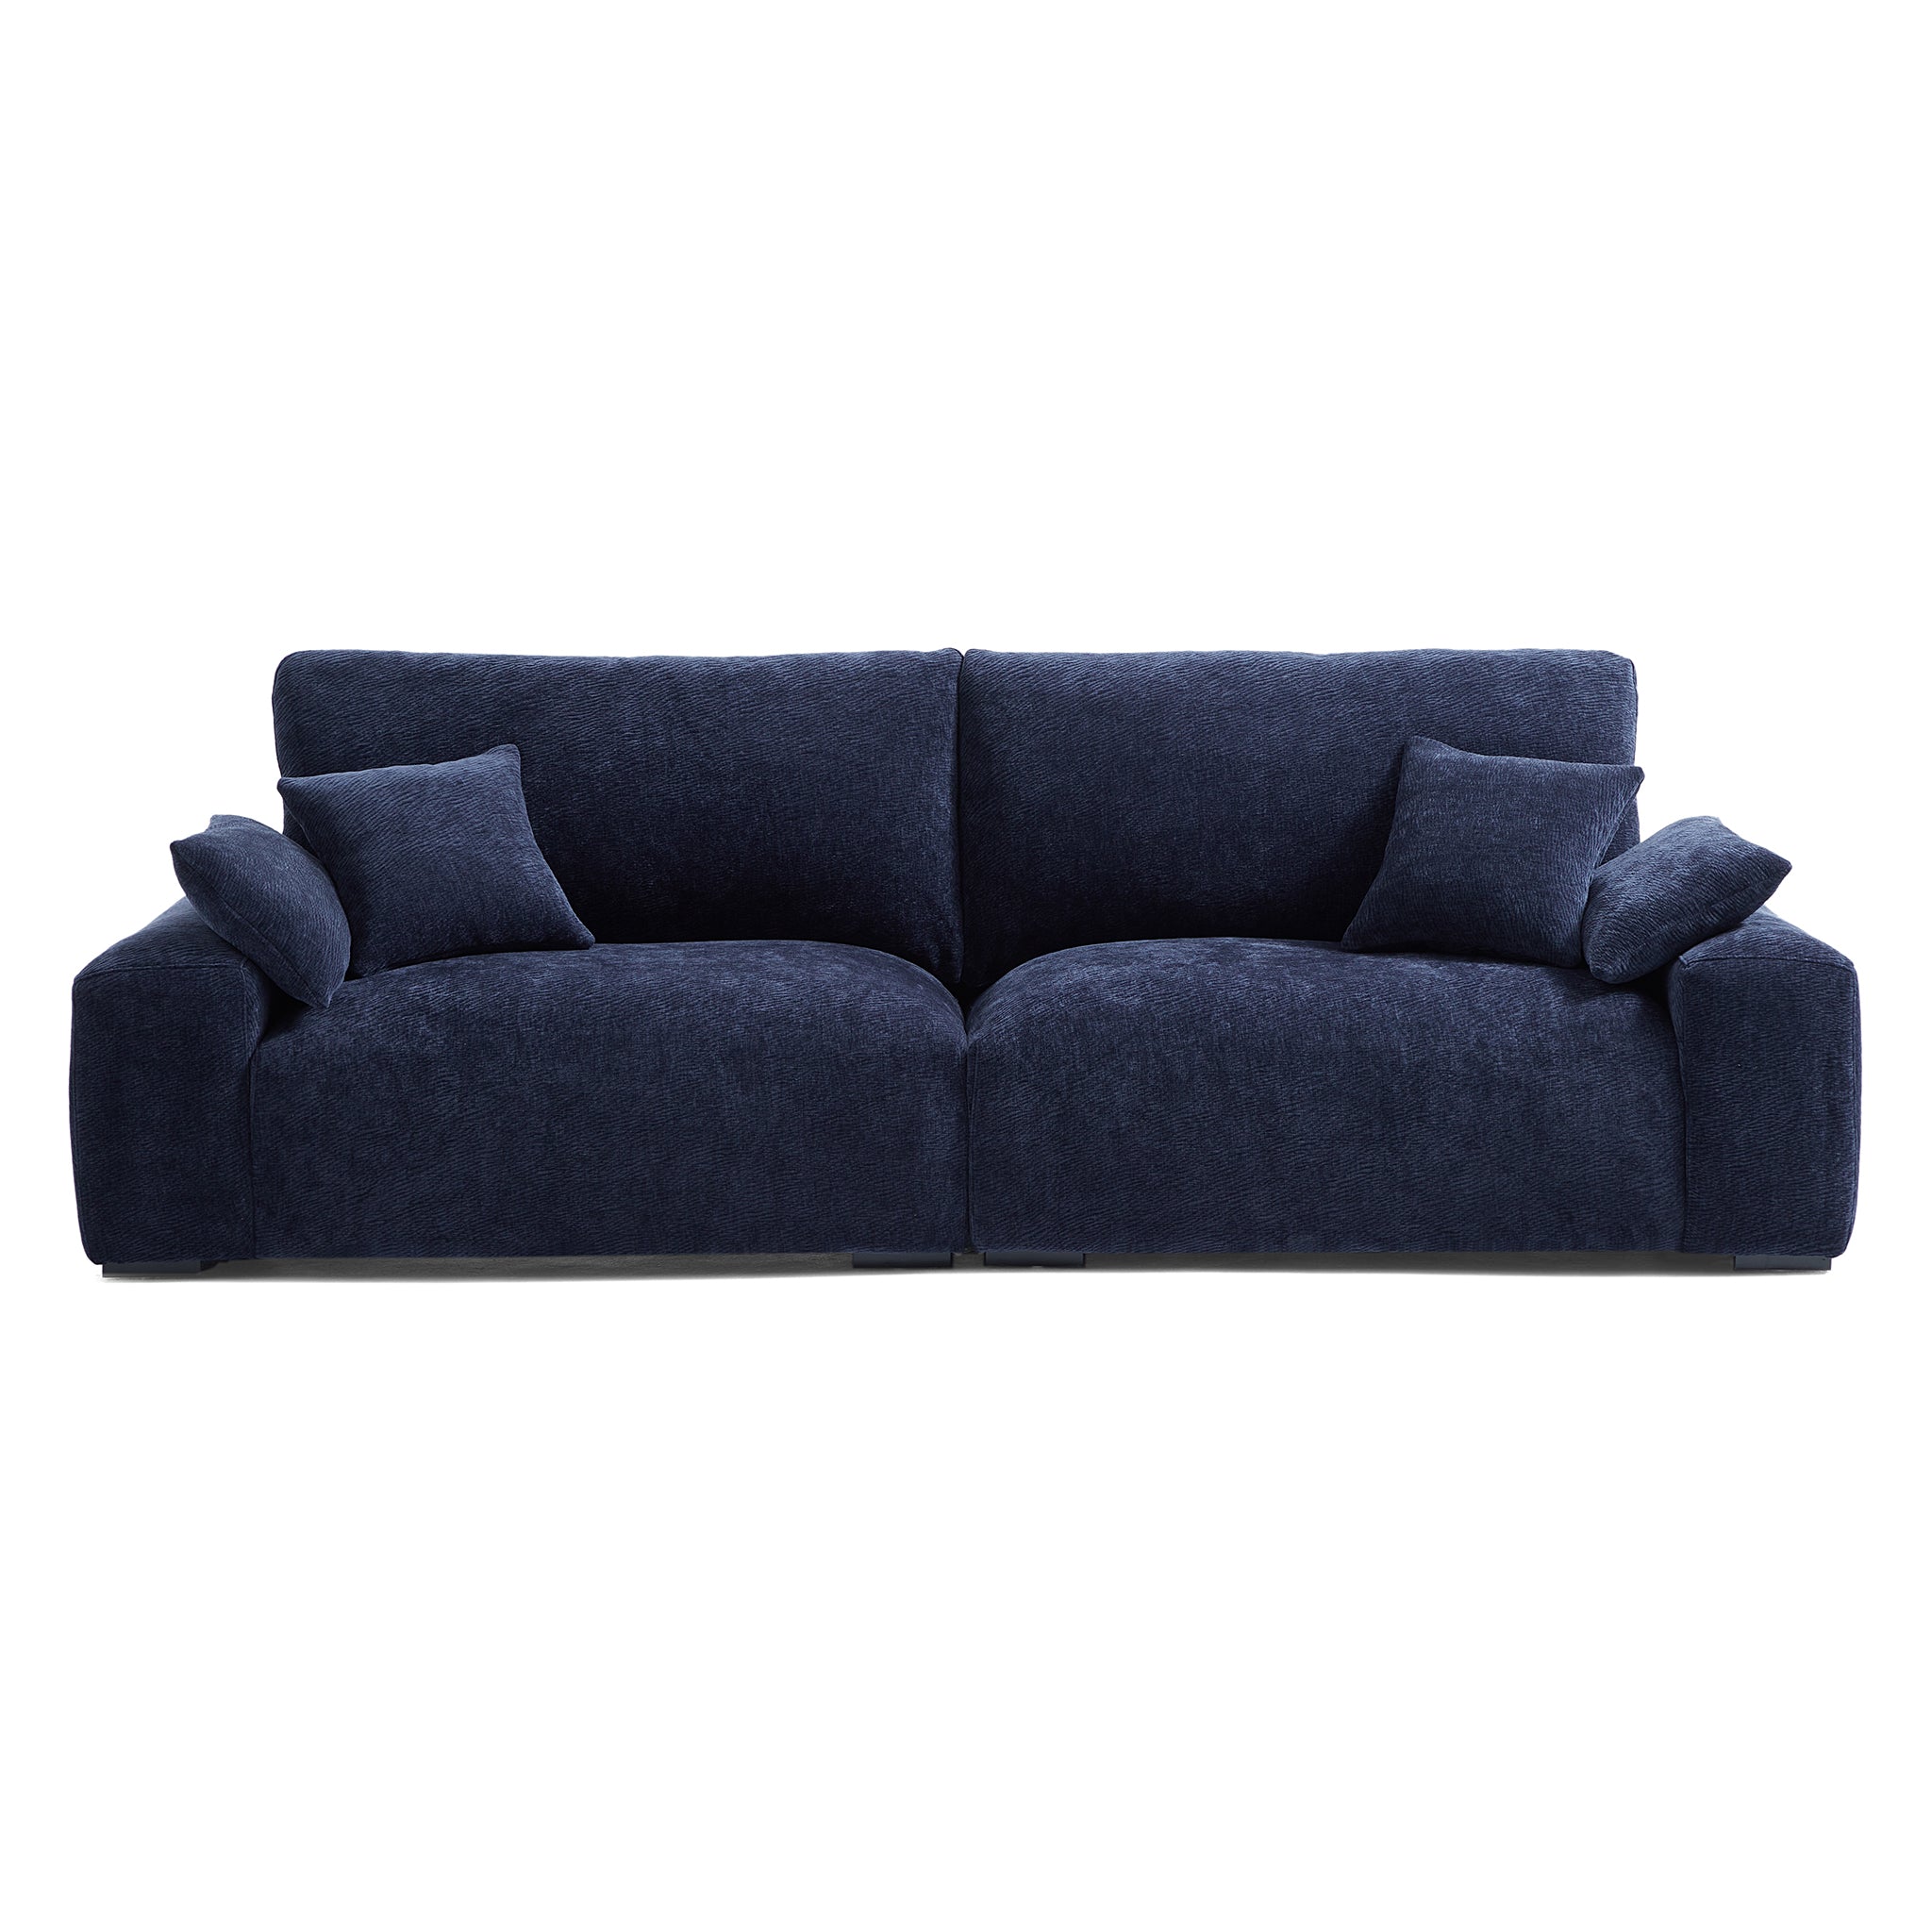 The Empress Navy Blue Sofa